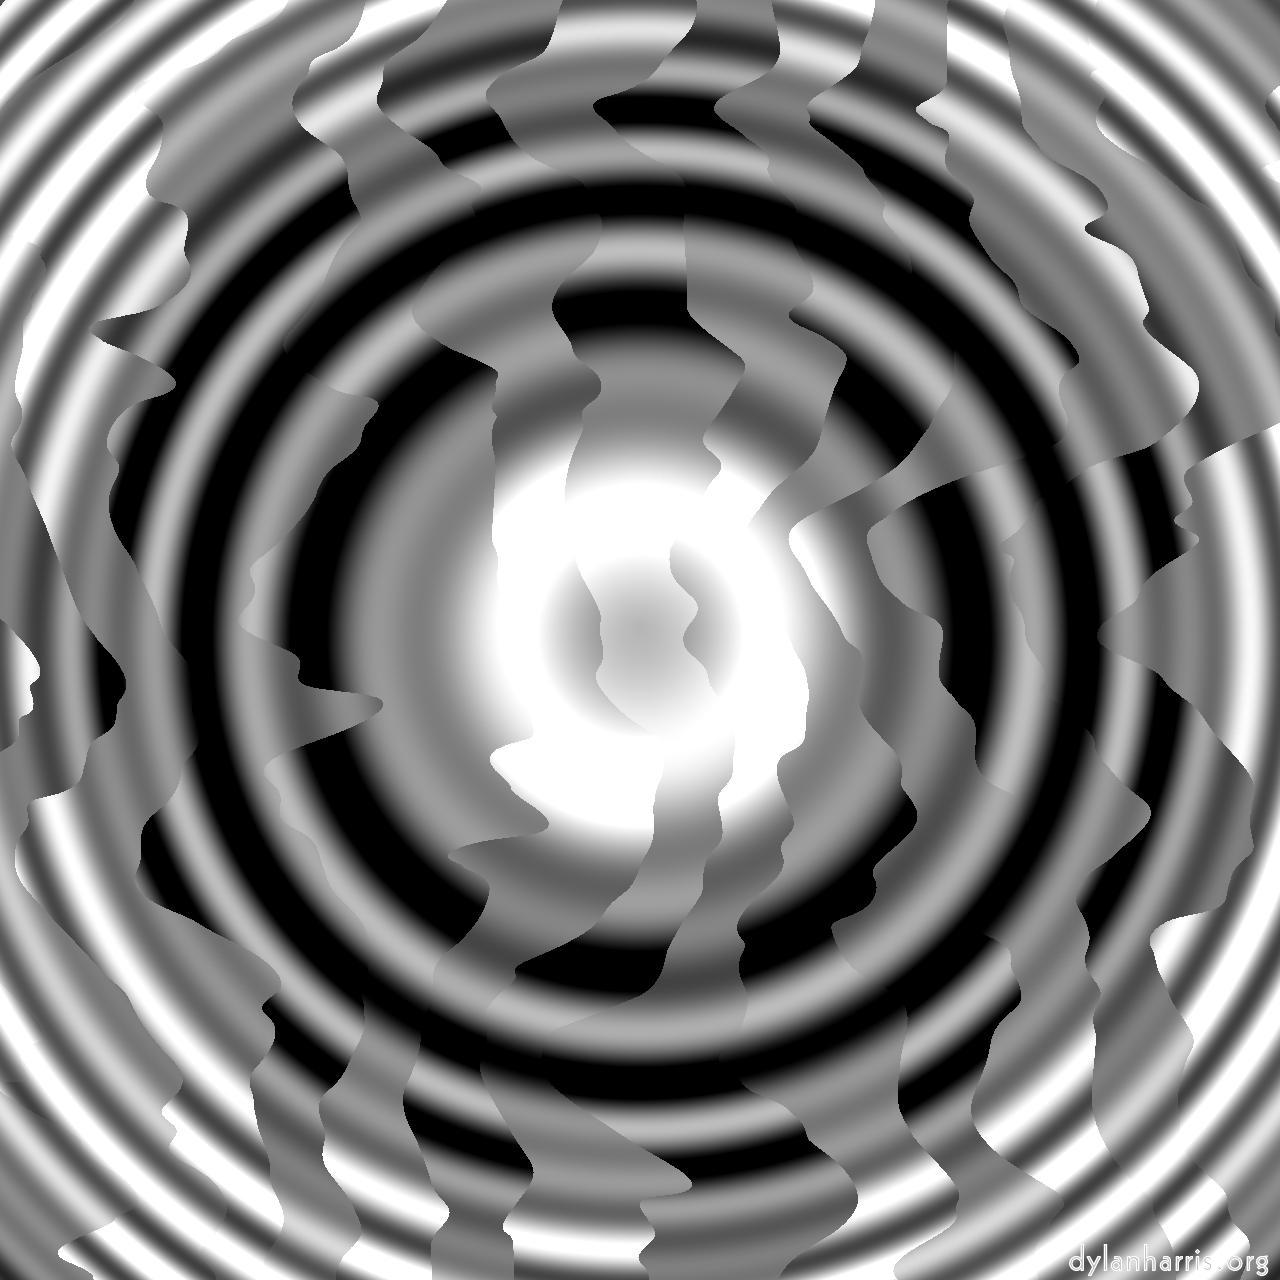 pen modulation 2 :: waves intersecting 2 circles